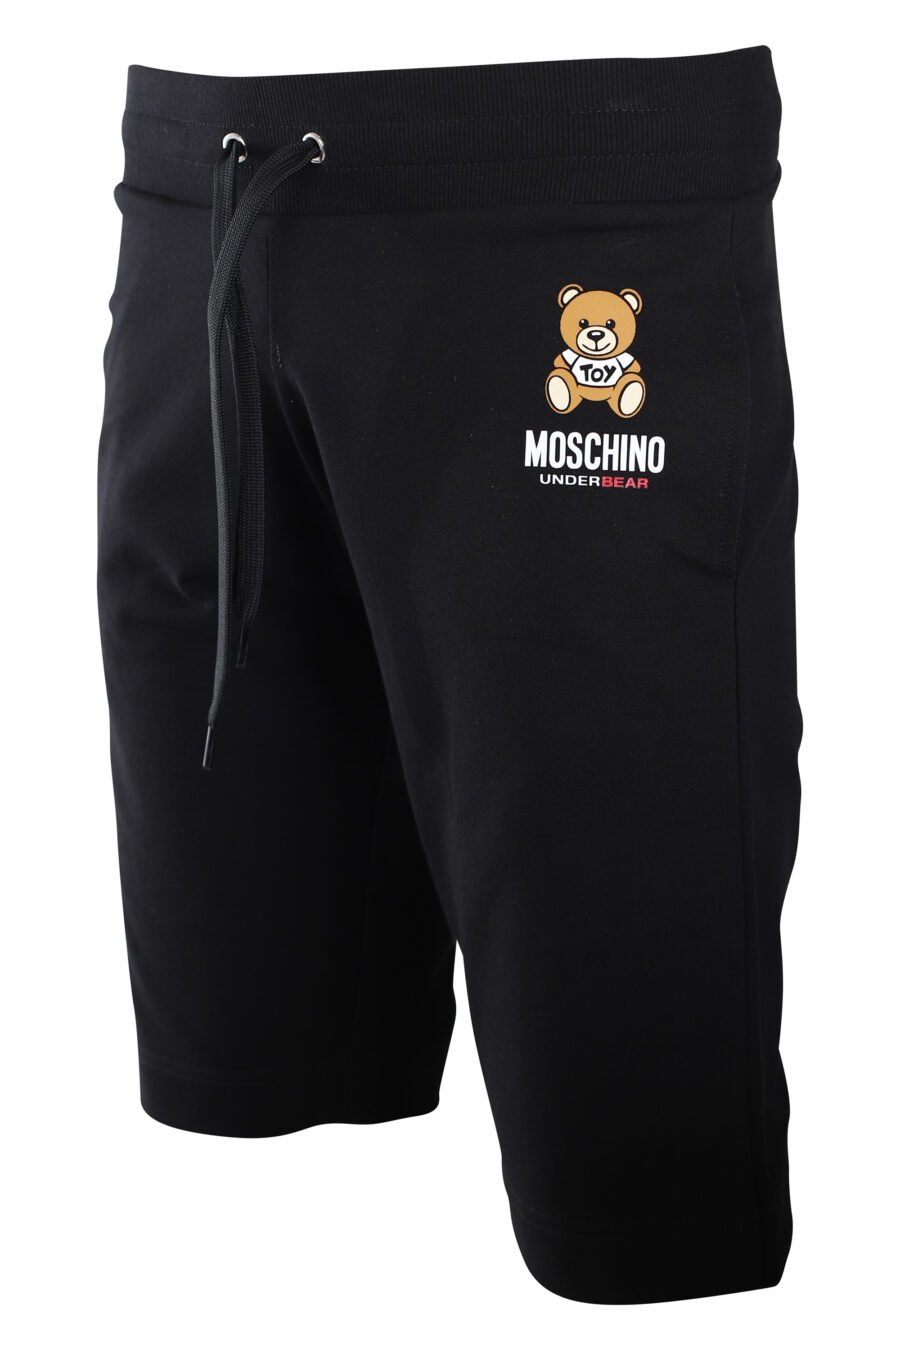 Trainingshose schwarz mit Bären-Mini-Logo "underbear" - IMG 2231